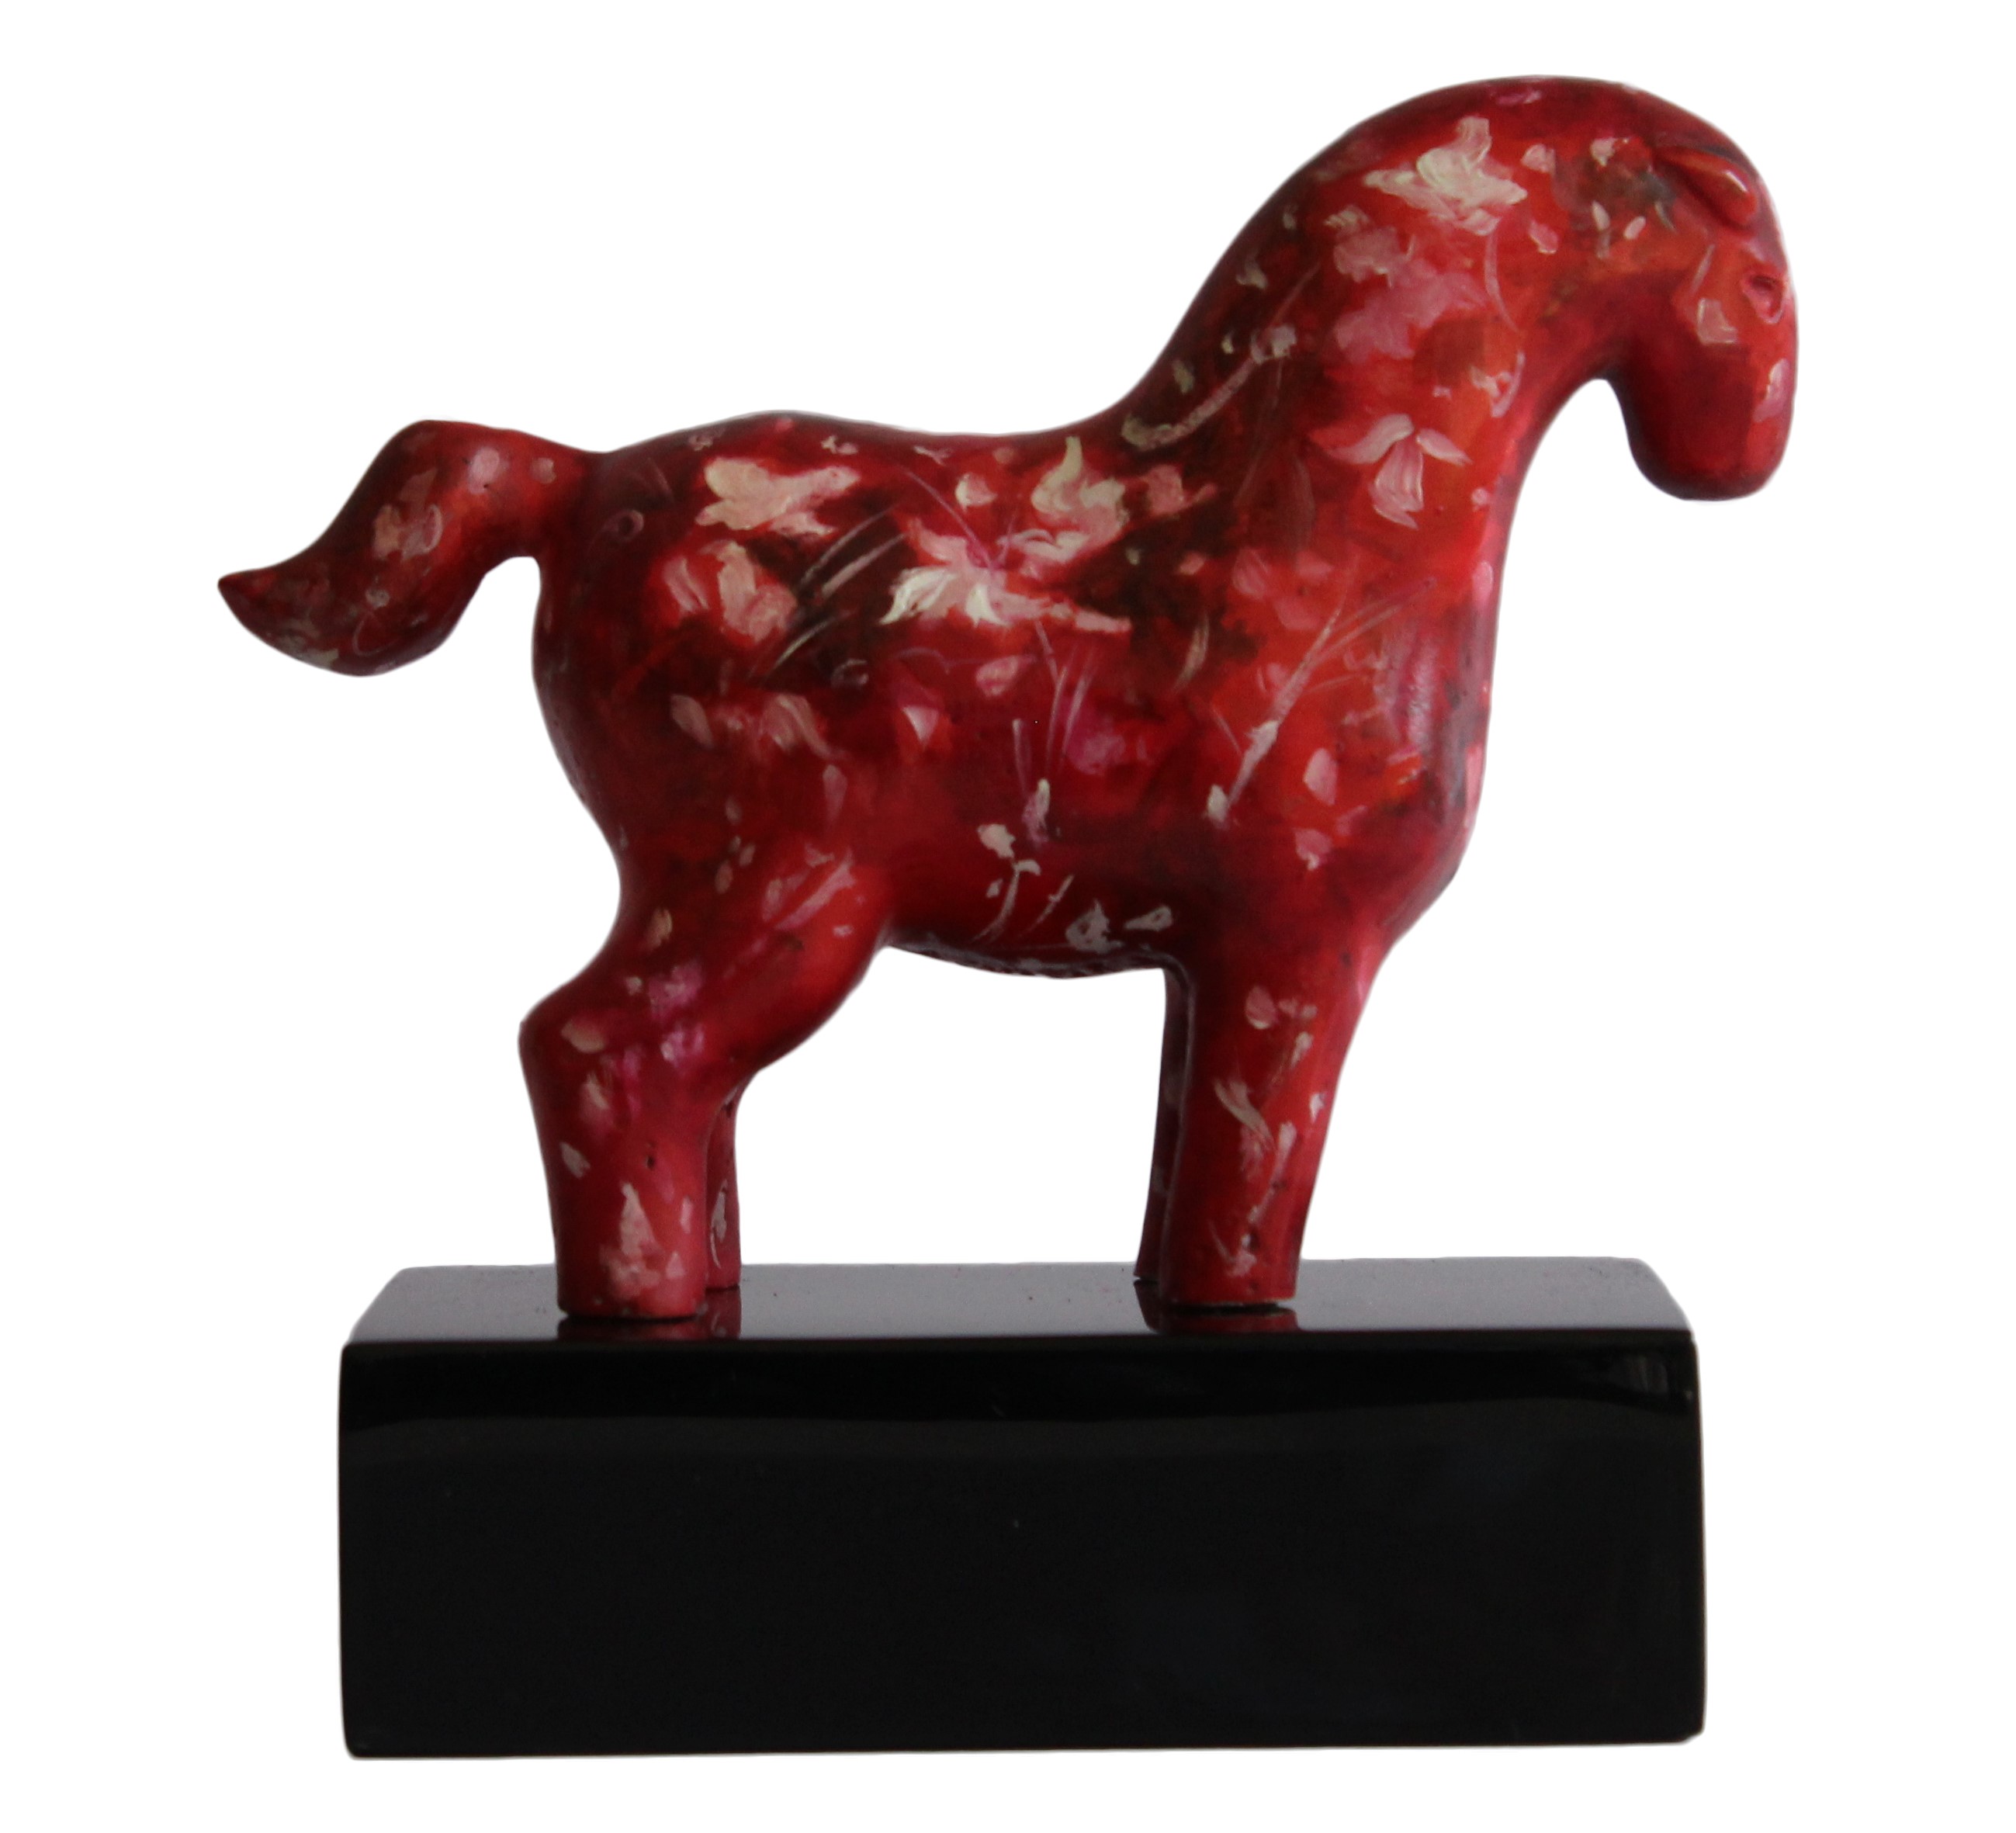 Rojo (bronze sculpture galerie art robert deniau mougins)